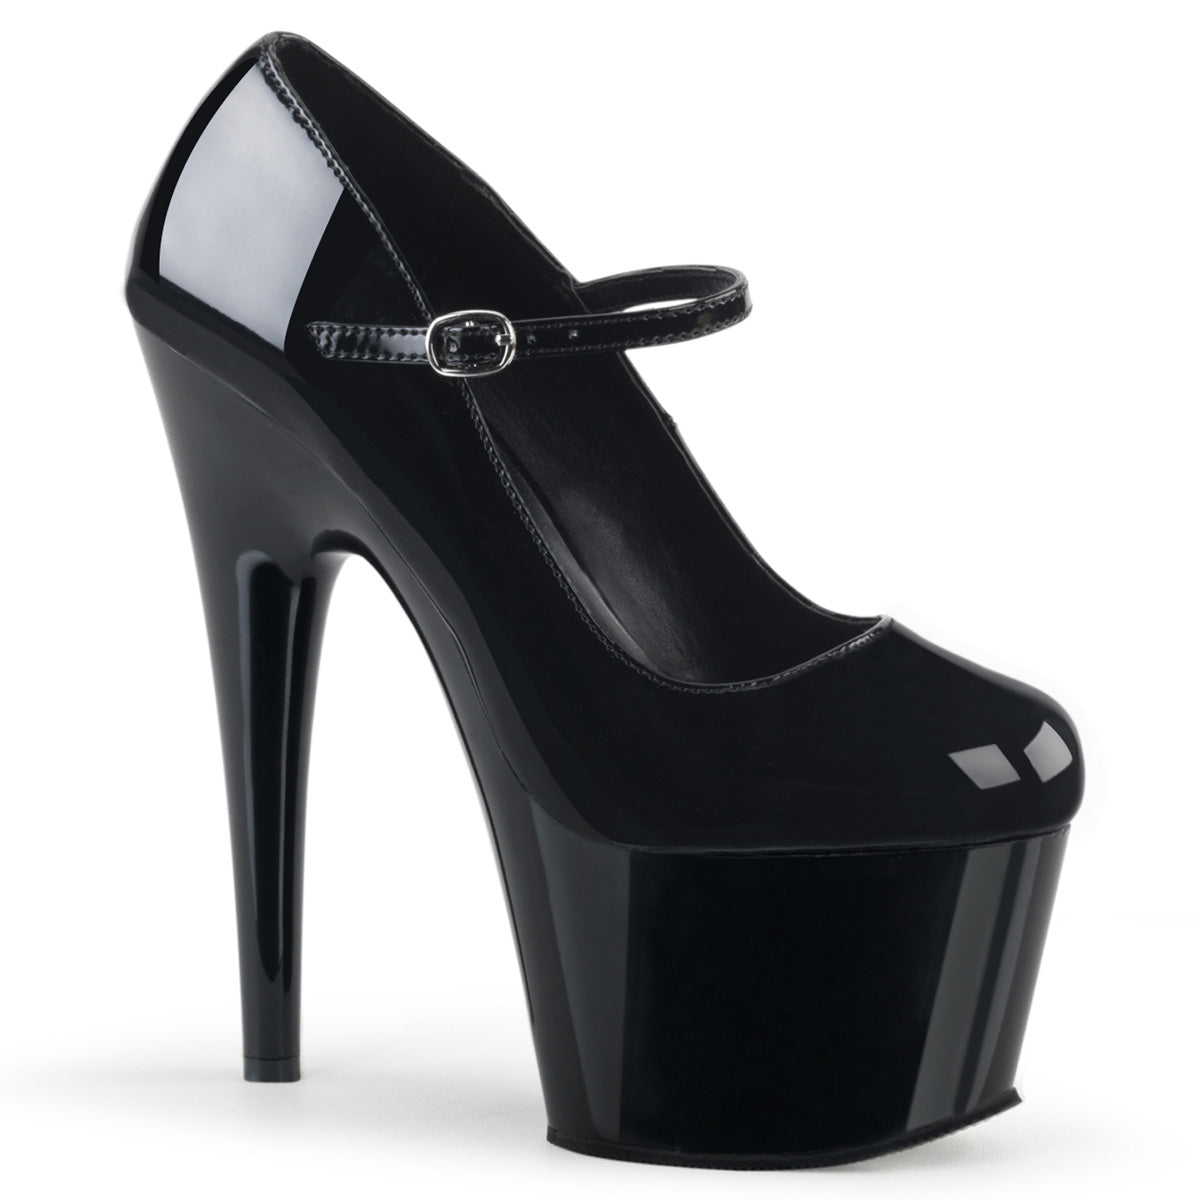 Adore-787 pleaser Sexy 7 "Heel Black Patent Pole Dancer Shoe